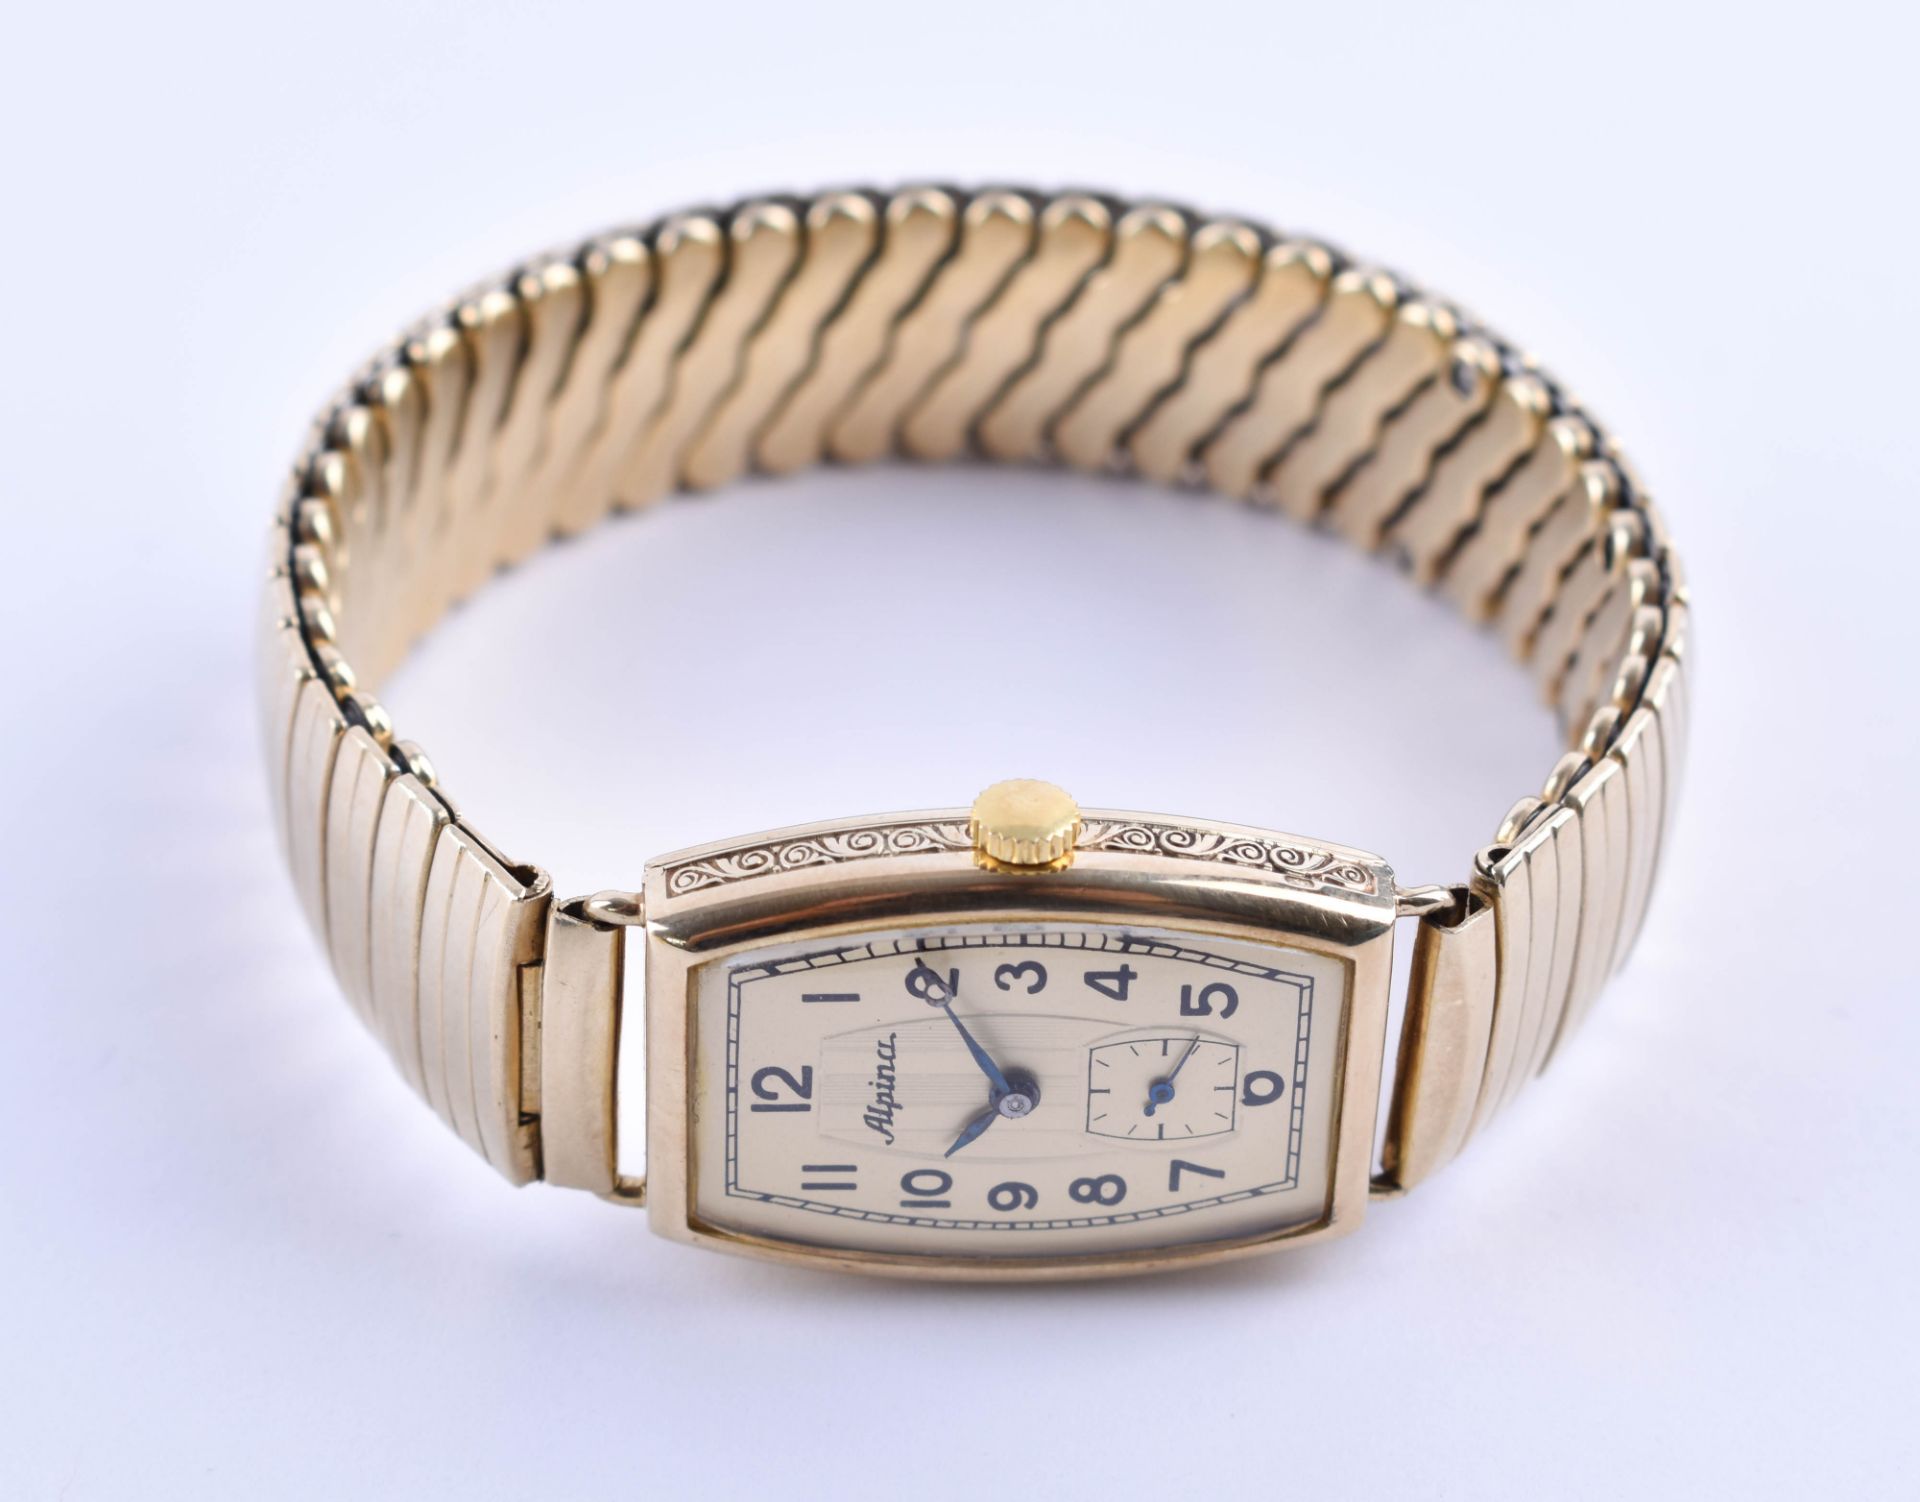  Alpina men's vintage wristwatch 30 / 40 - Image 2 of 4